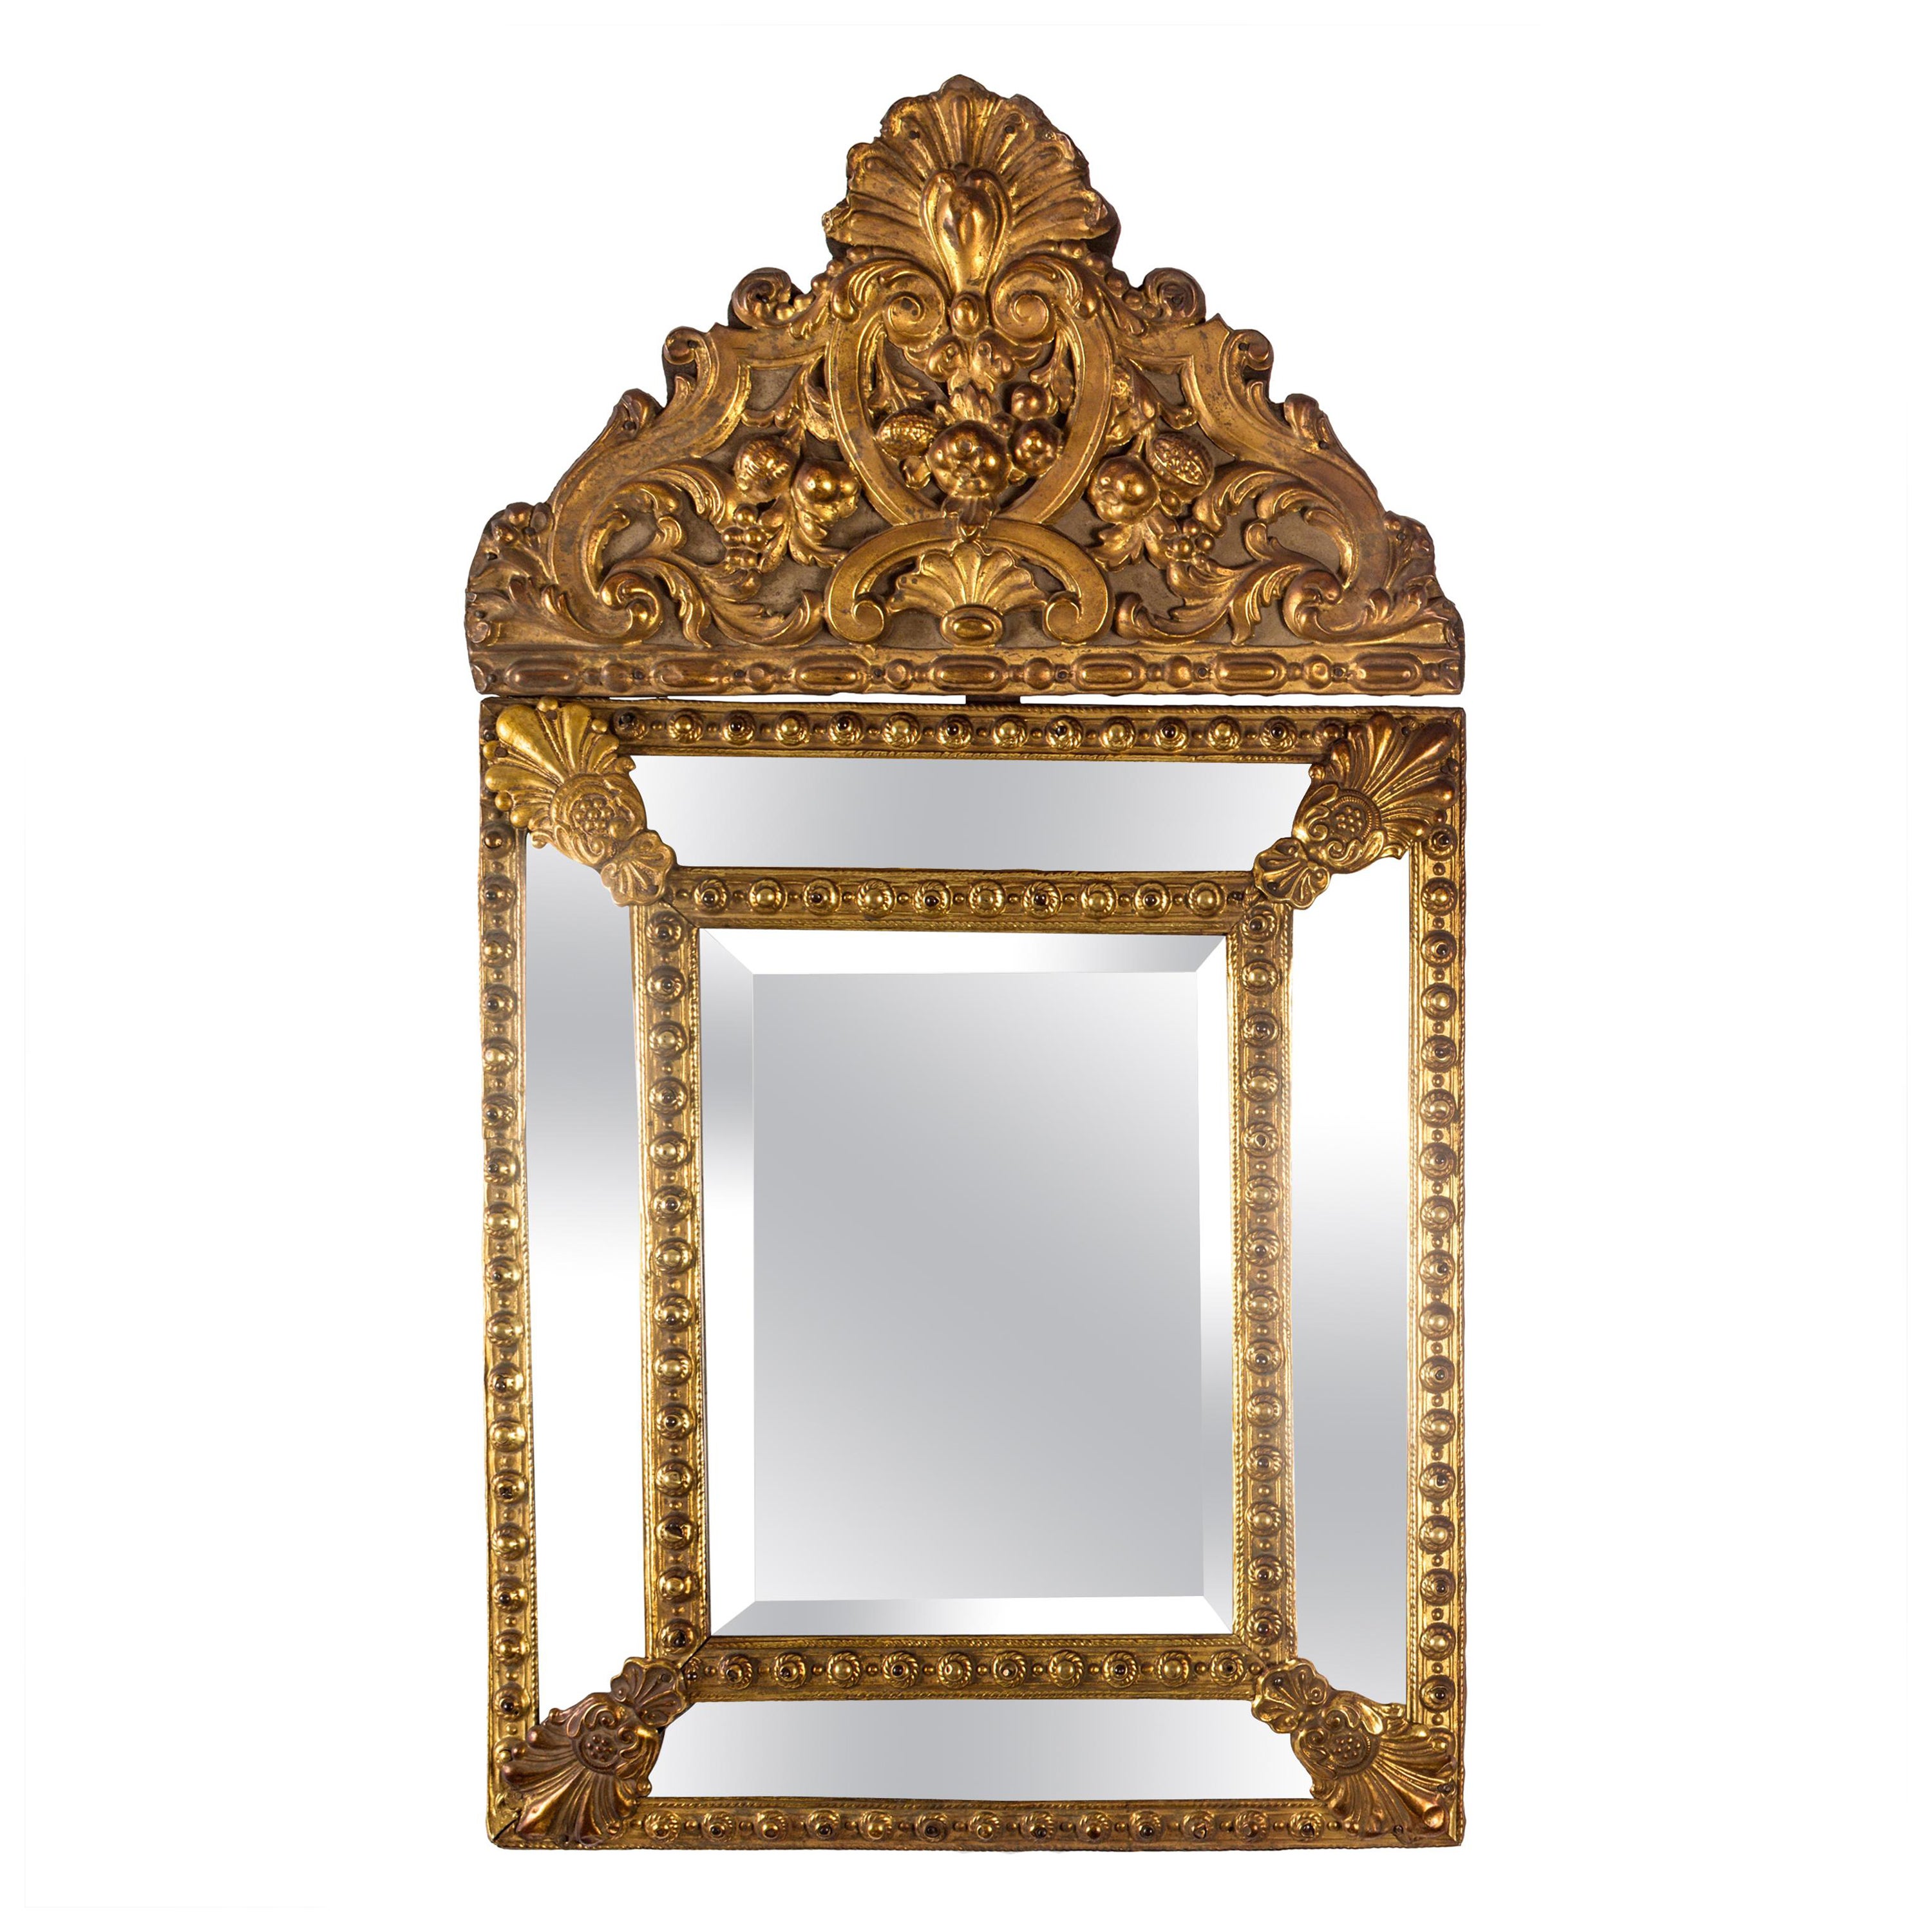 19th Century Dutch Baroque Style Repoussé Metal-Framed Mirror